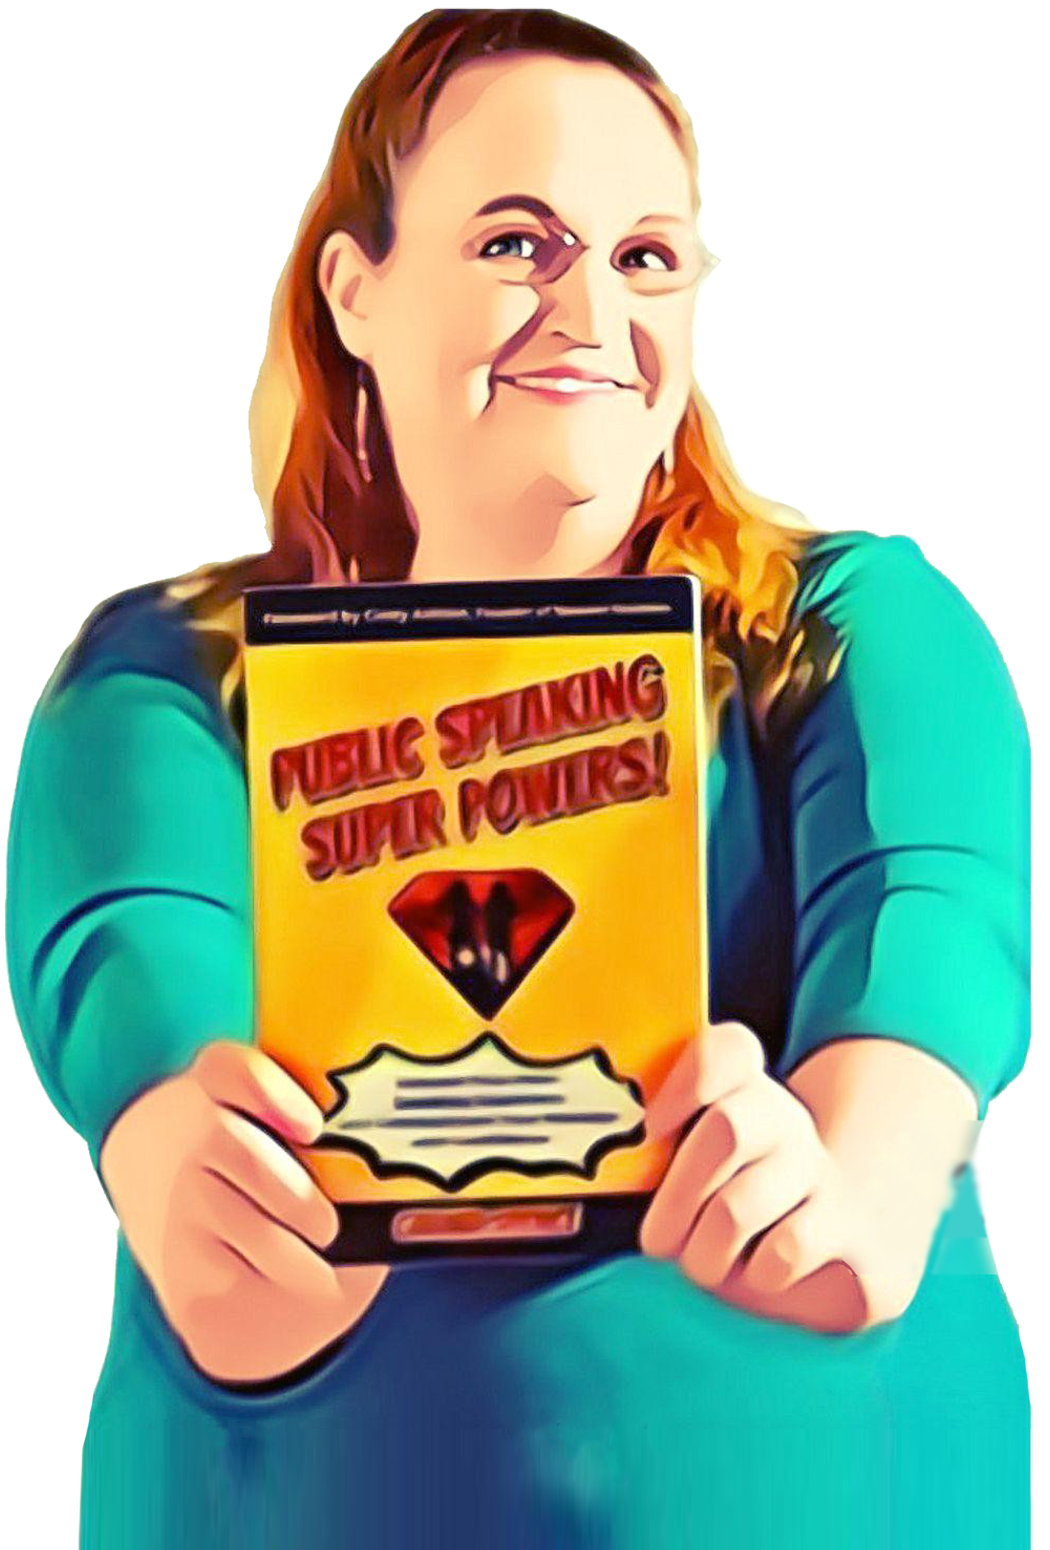 Carma posing with Public Speaking Super Powers